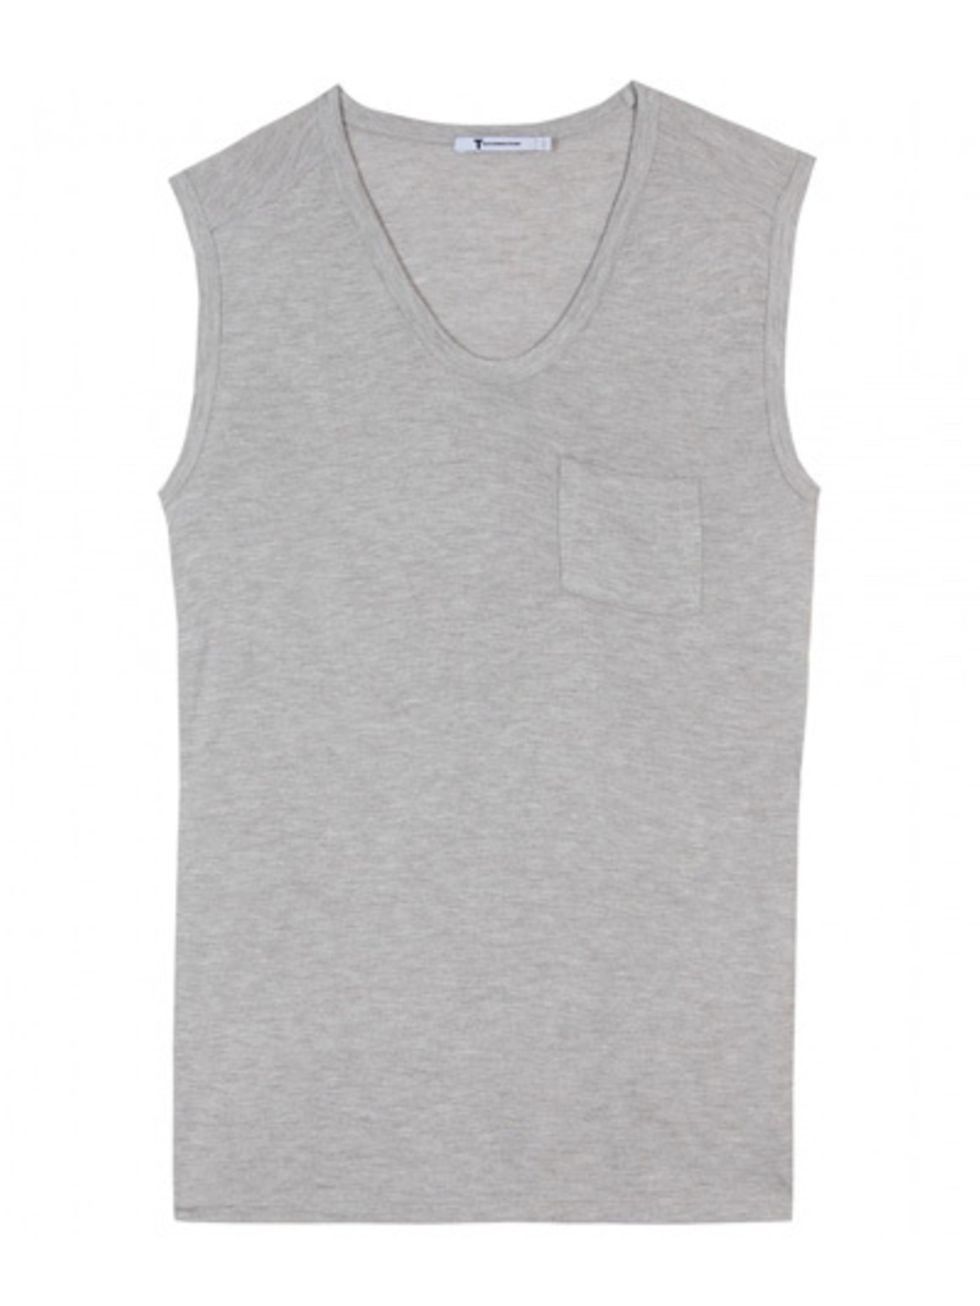 Product, White, Pattern, Black, Grey, Sleeveless shirt, Active shirt, Silver, Pattern, Active tank, 